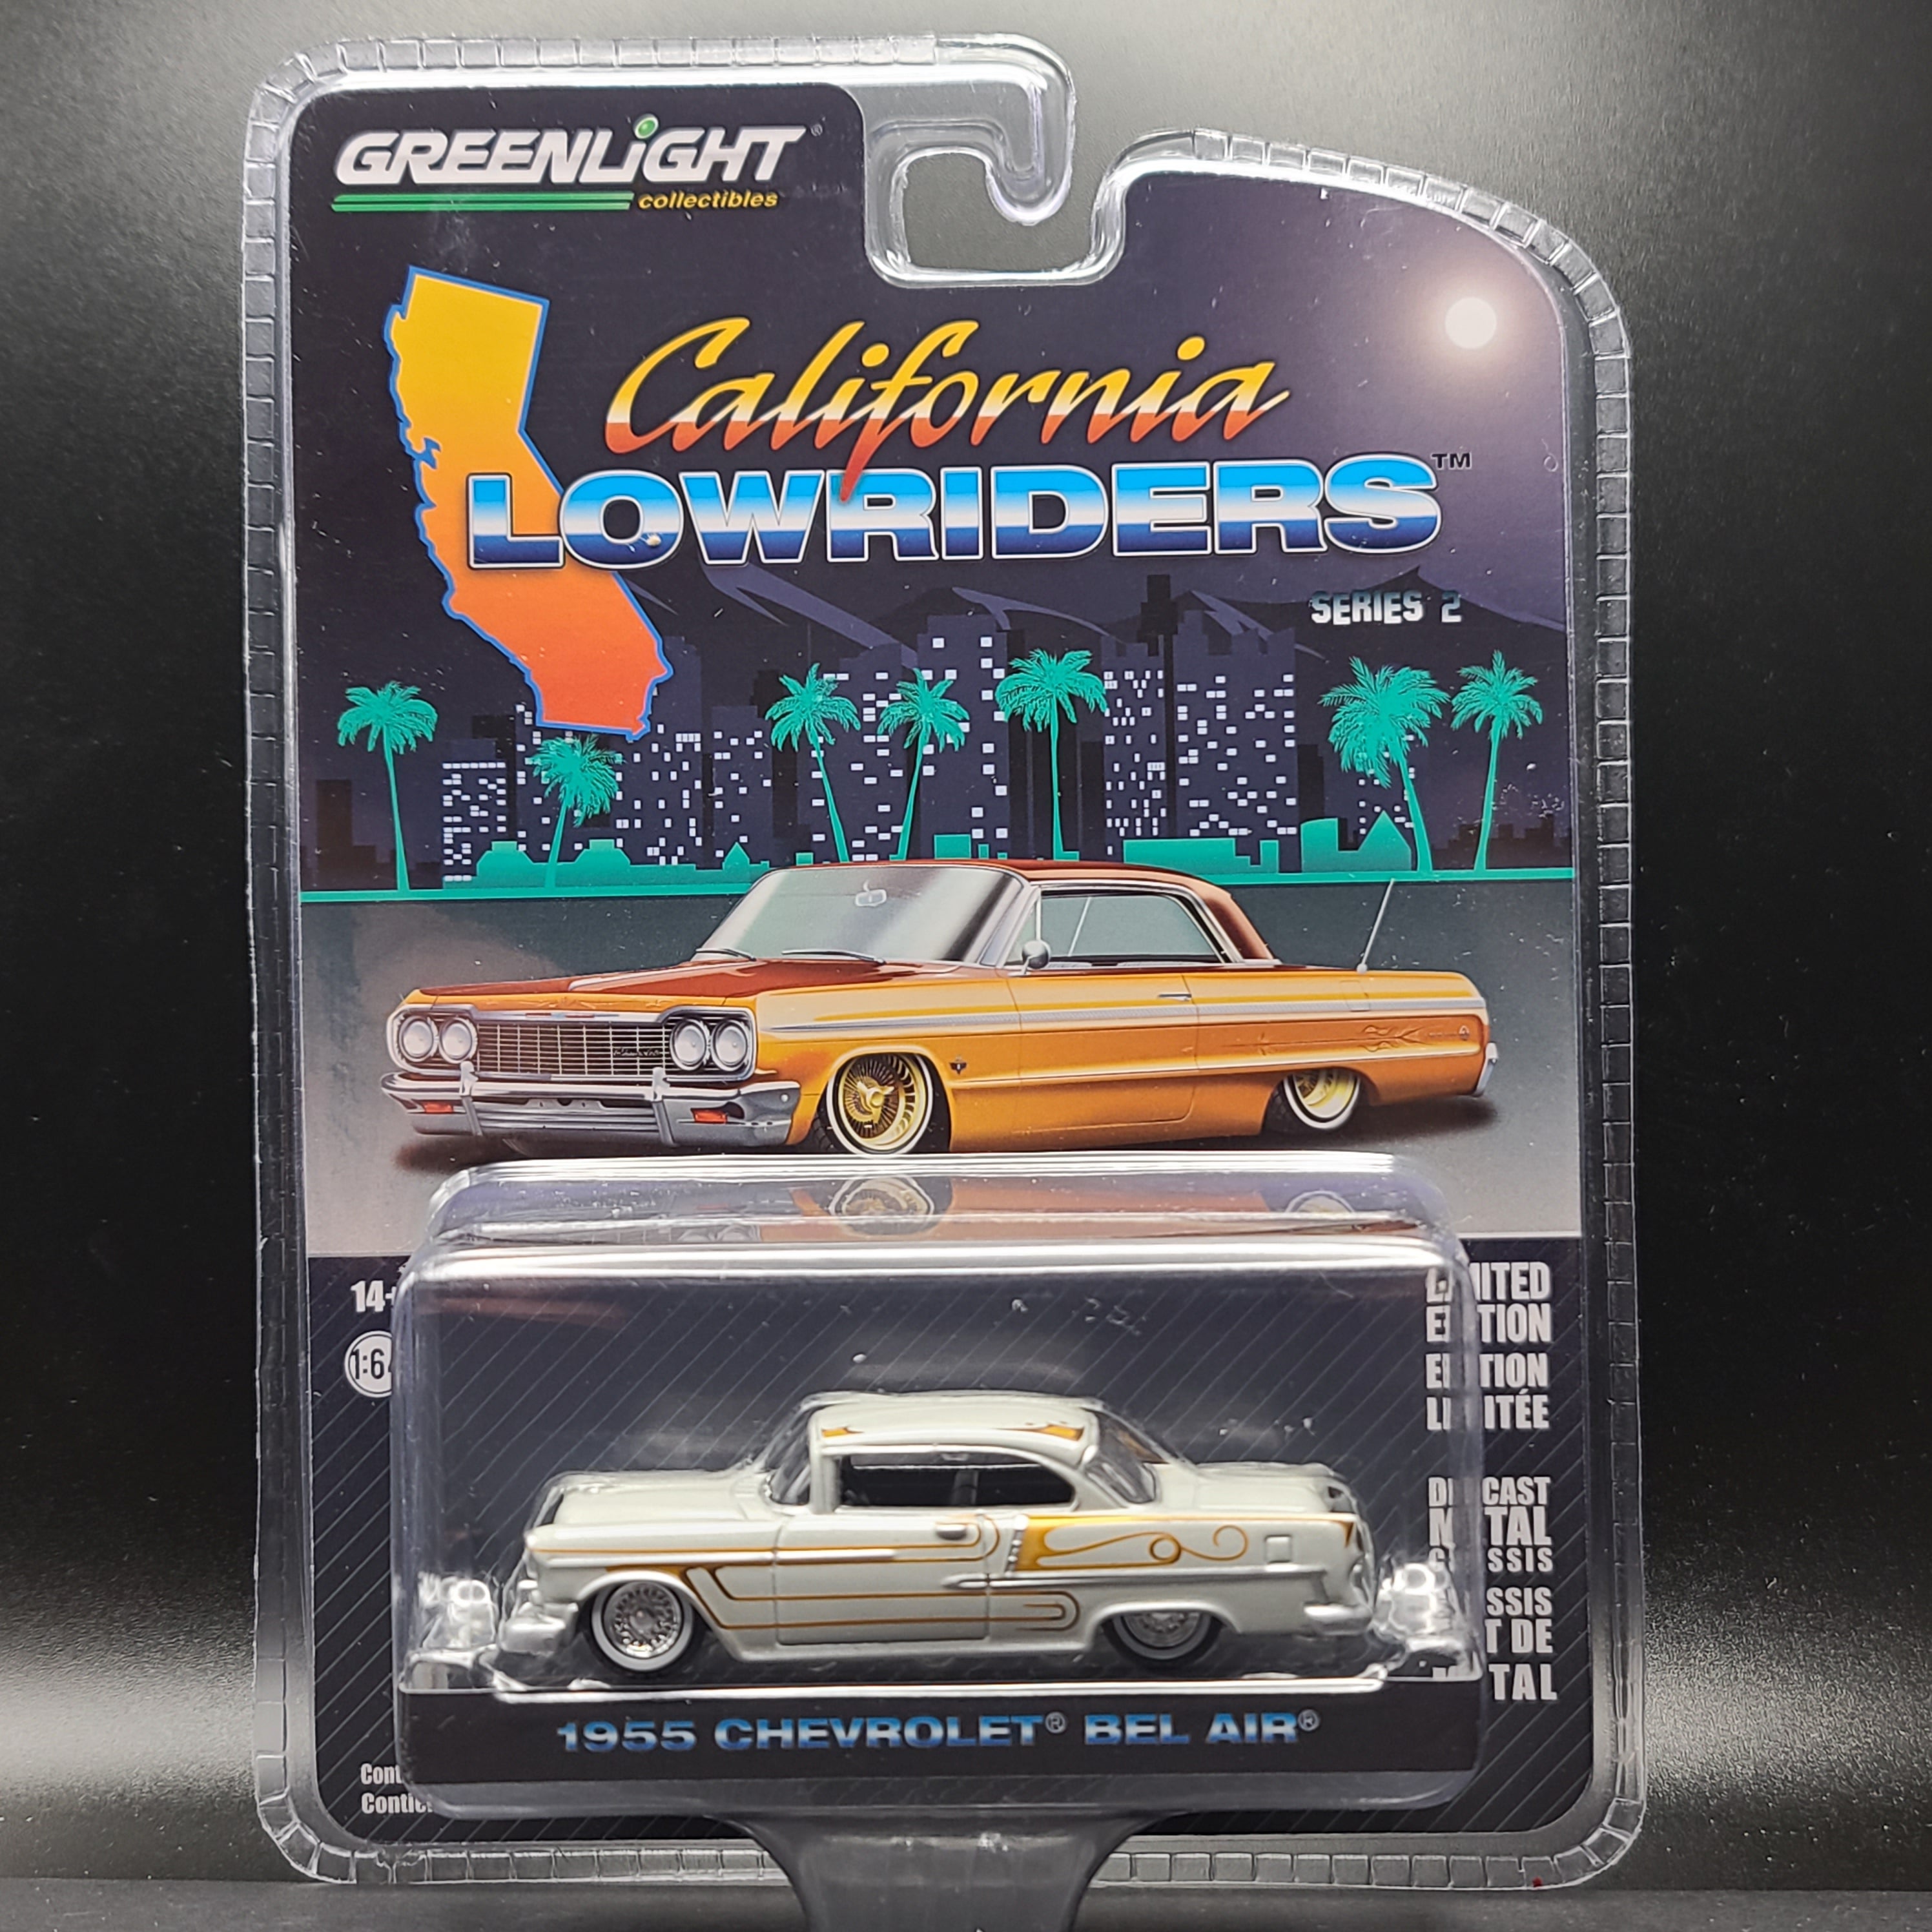 Greenlight '55 Chevrolet Bel Air (2022 California Lowriders - Series 2)